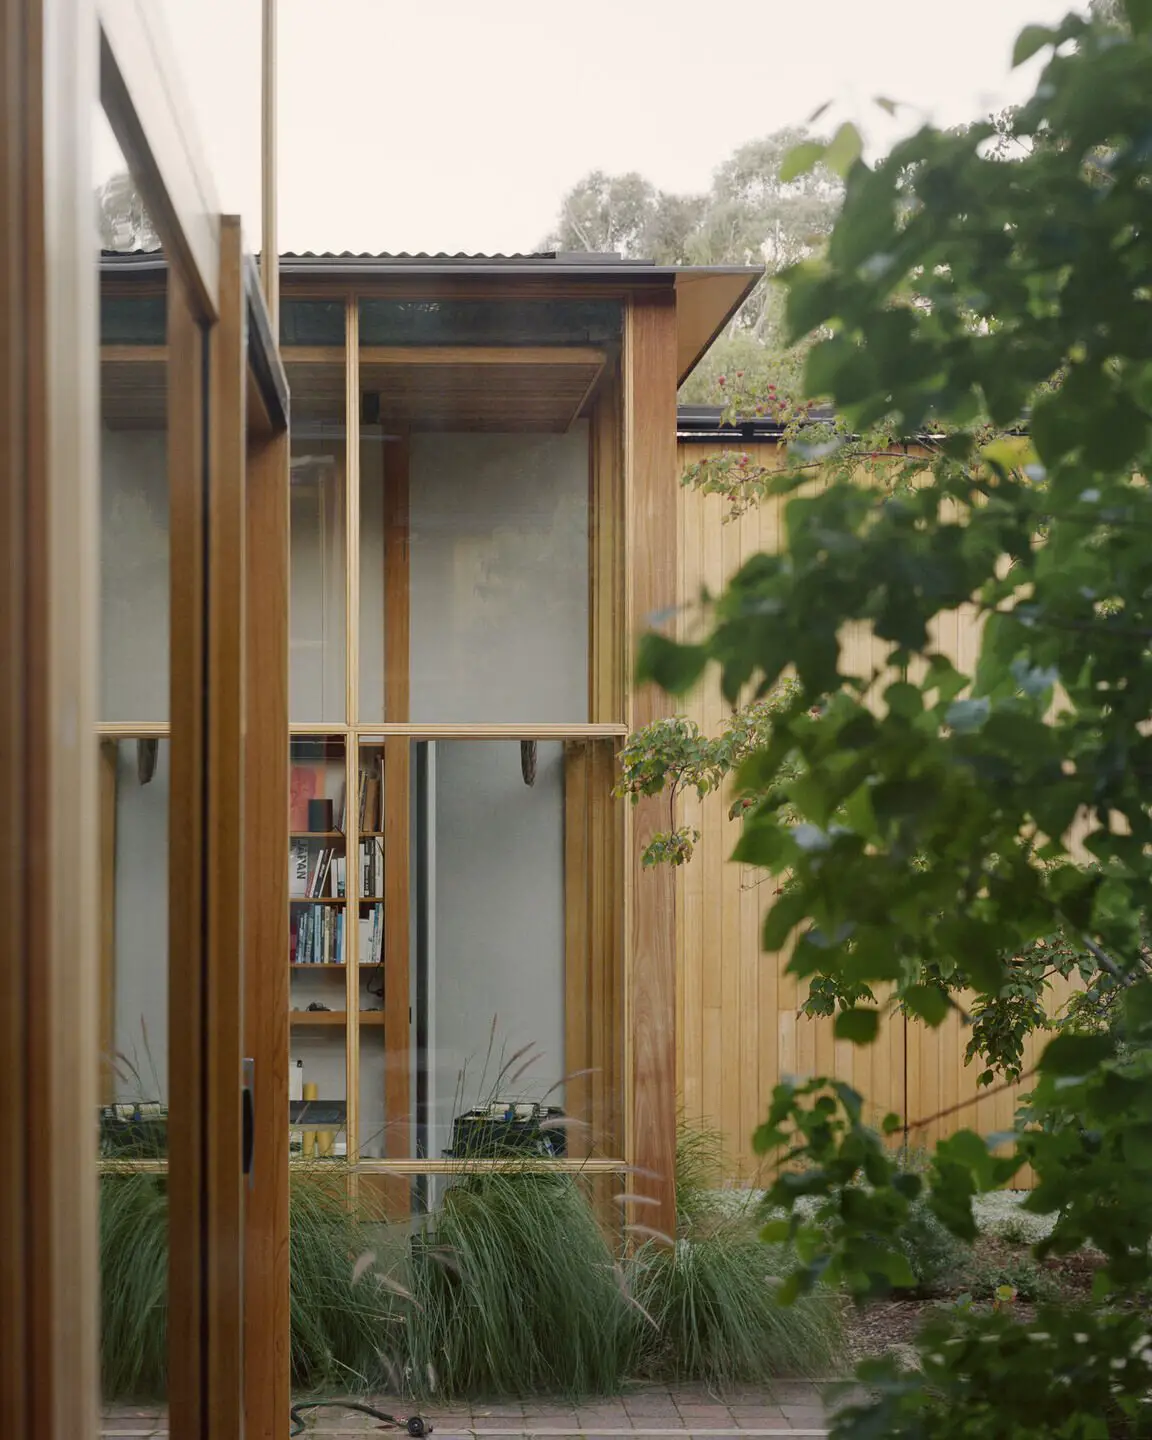 Wood-paneled courtyard house - studio view